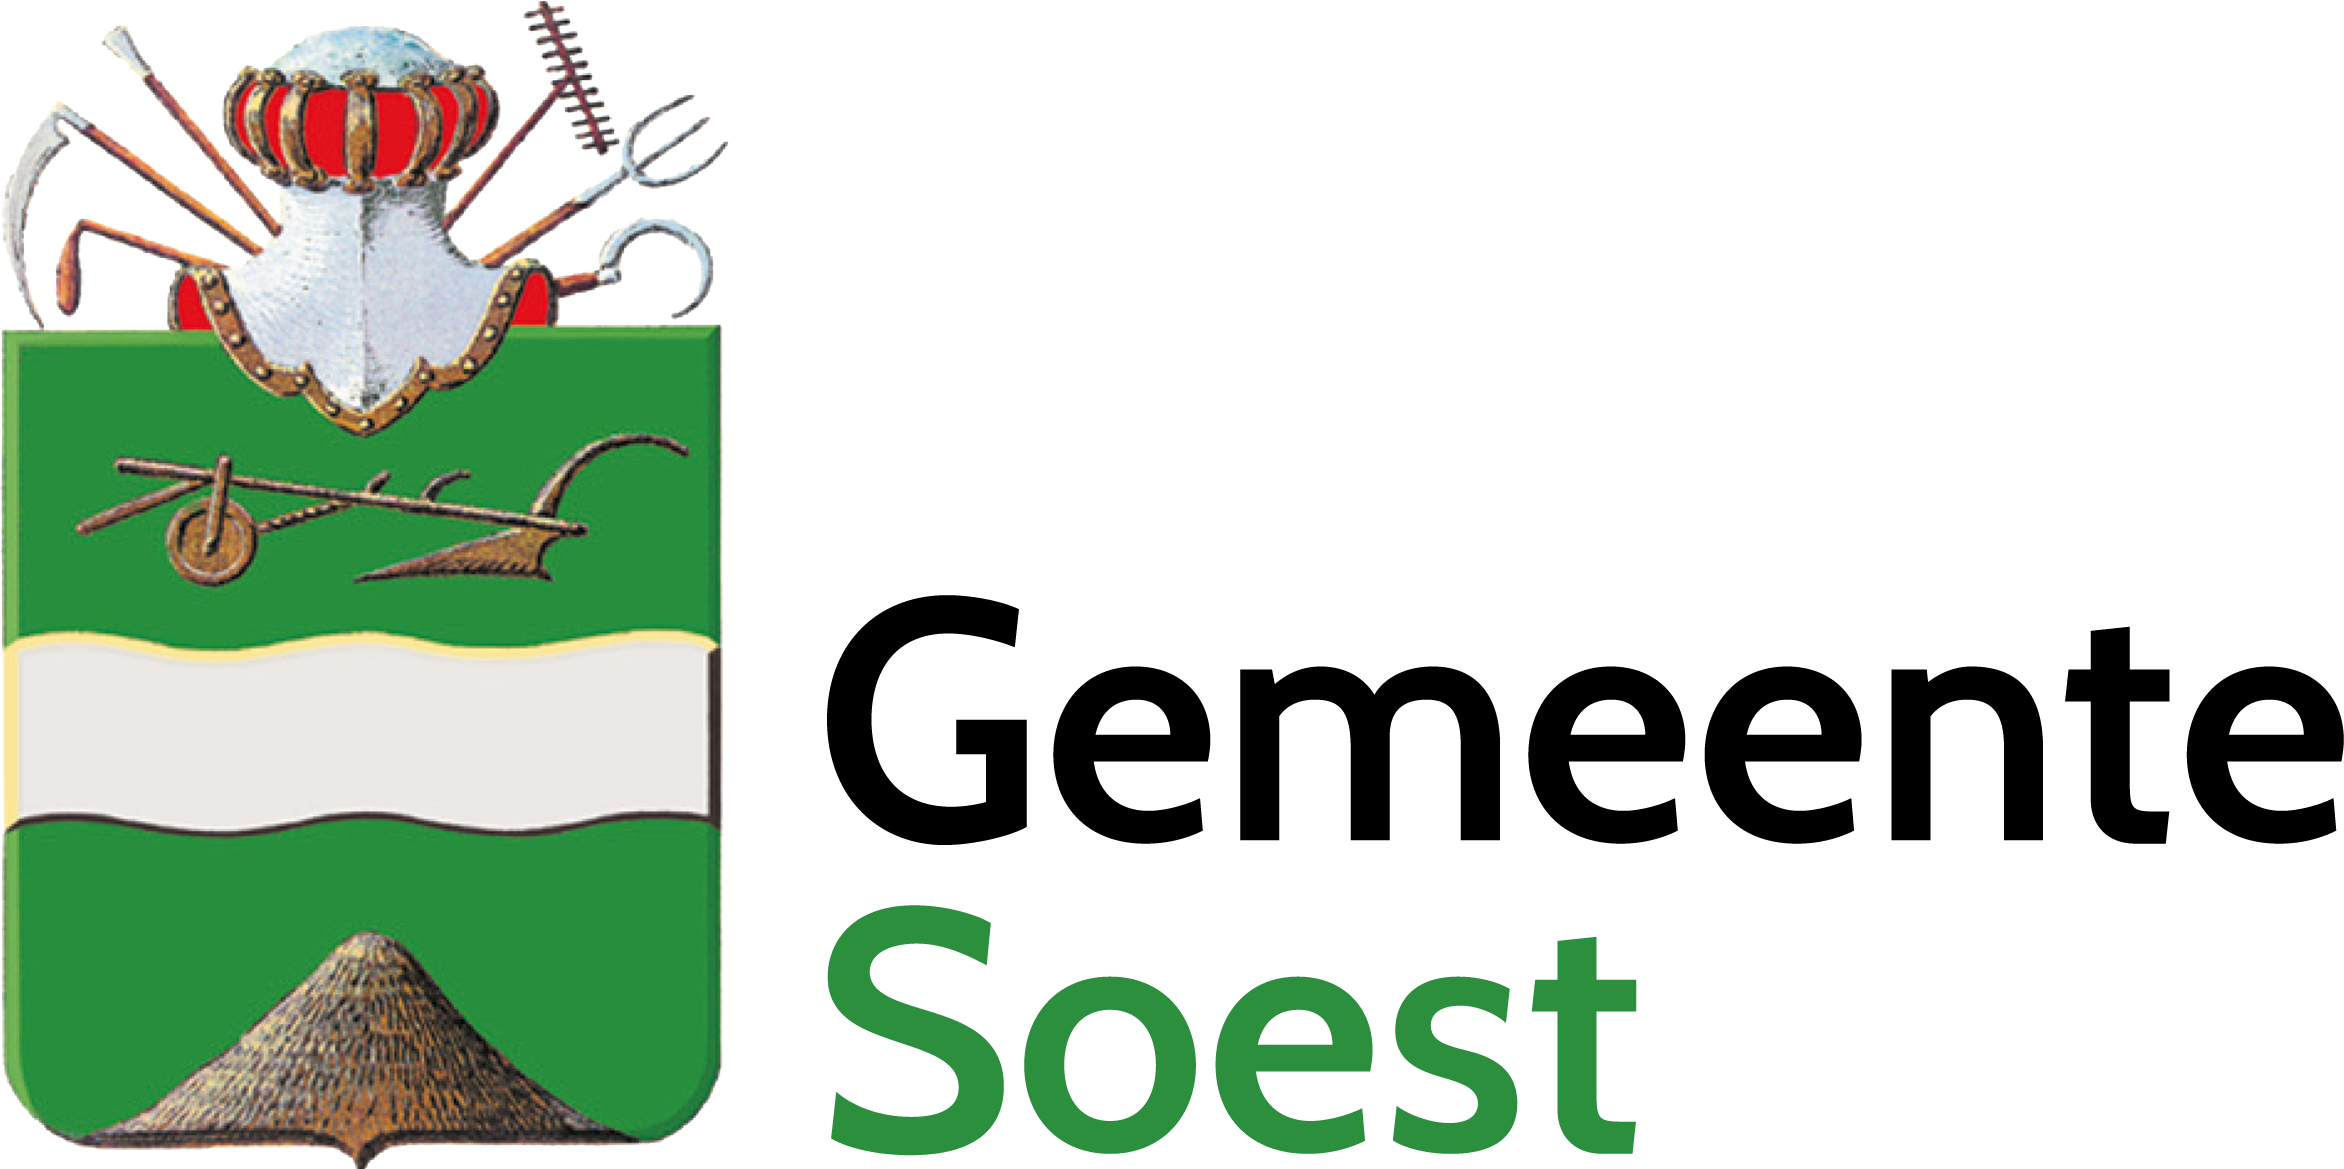 soest-logo